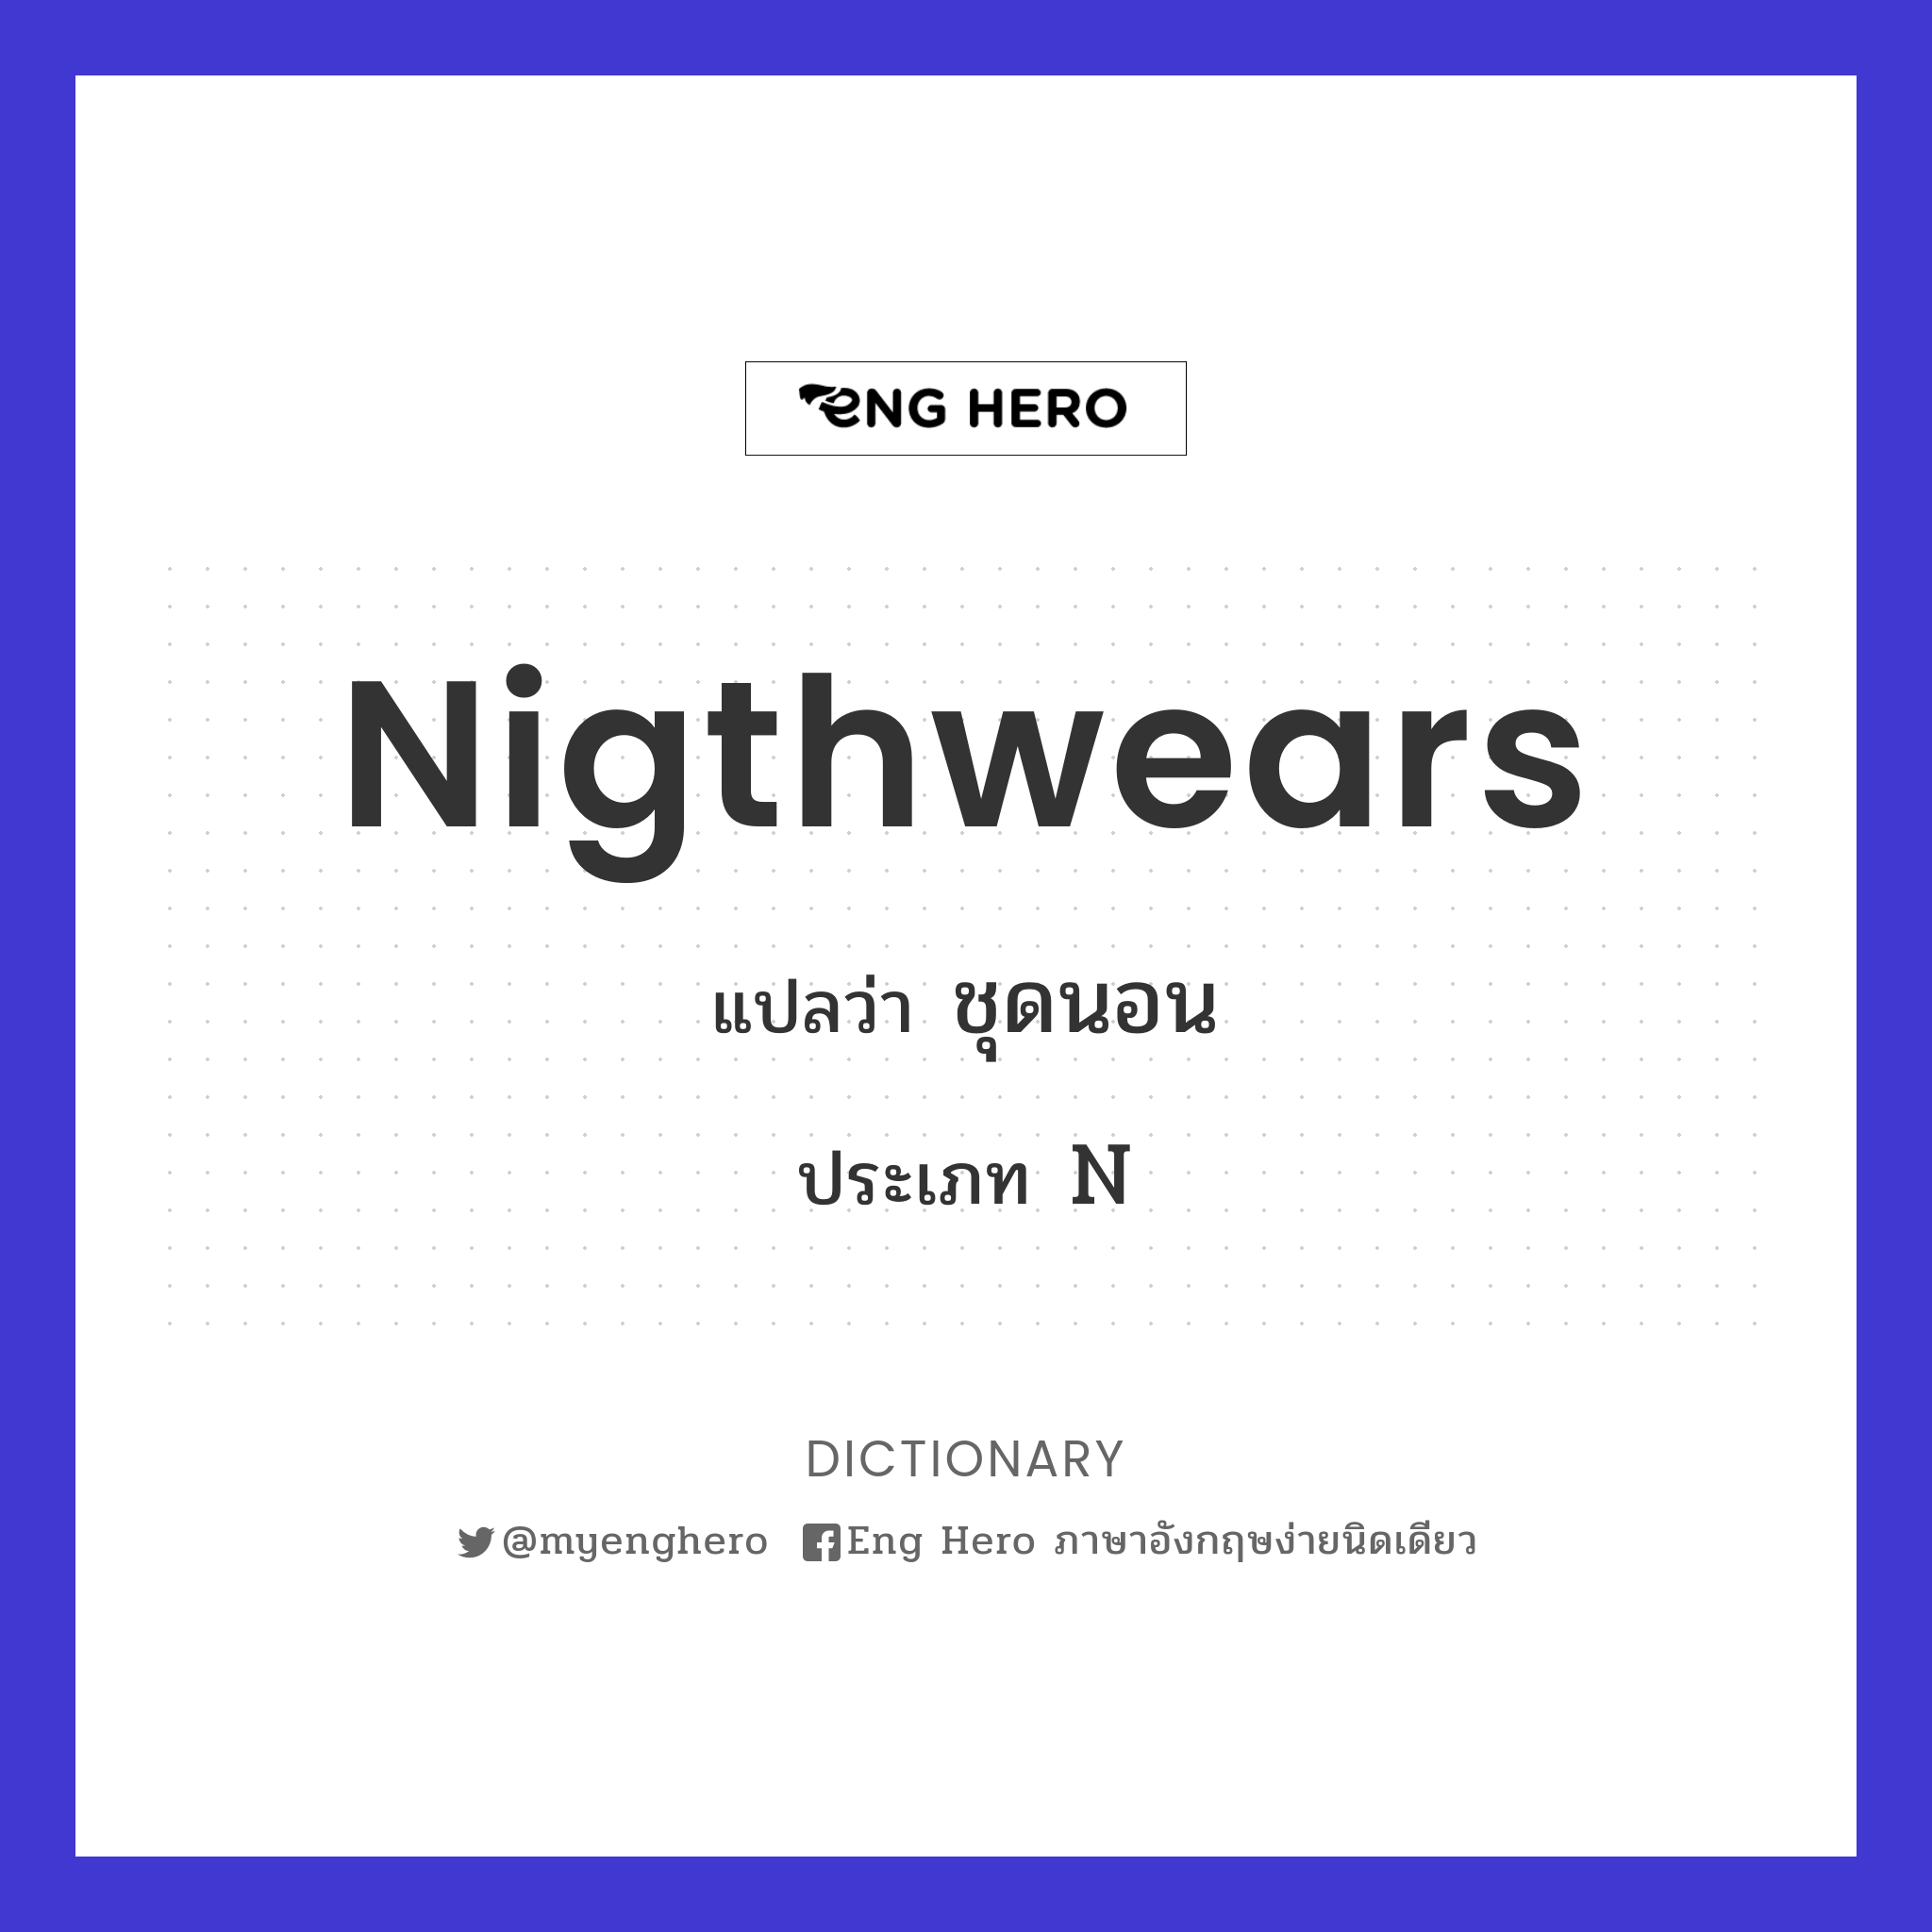 nigthwears